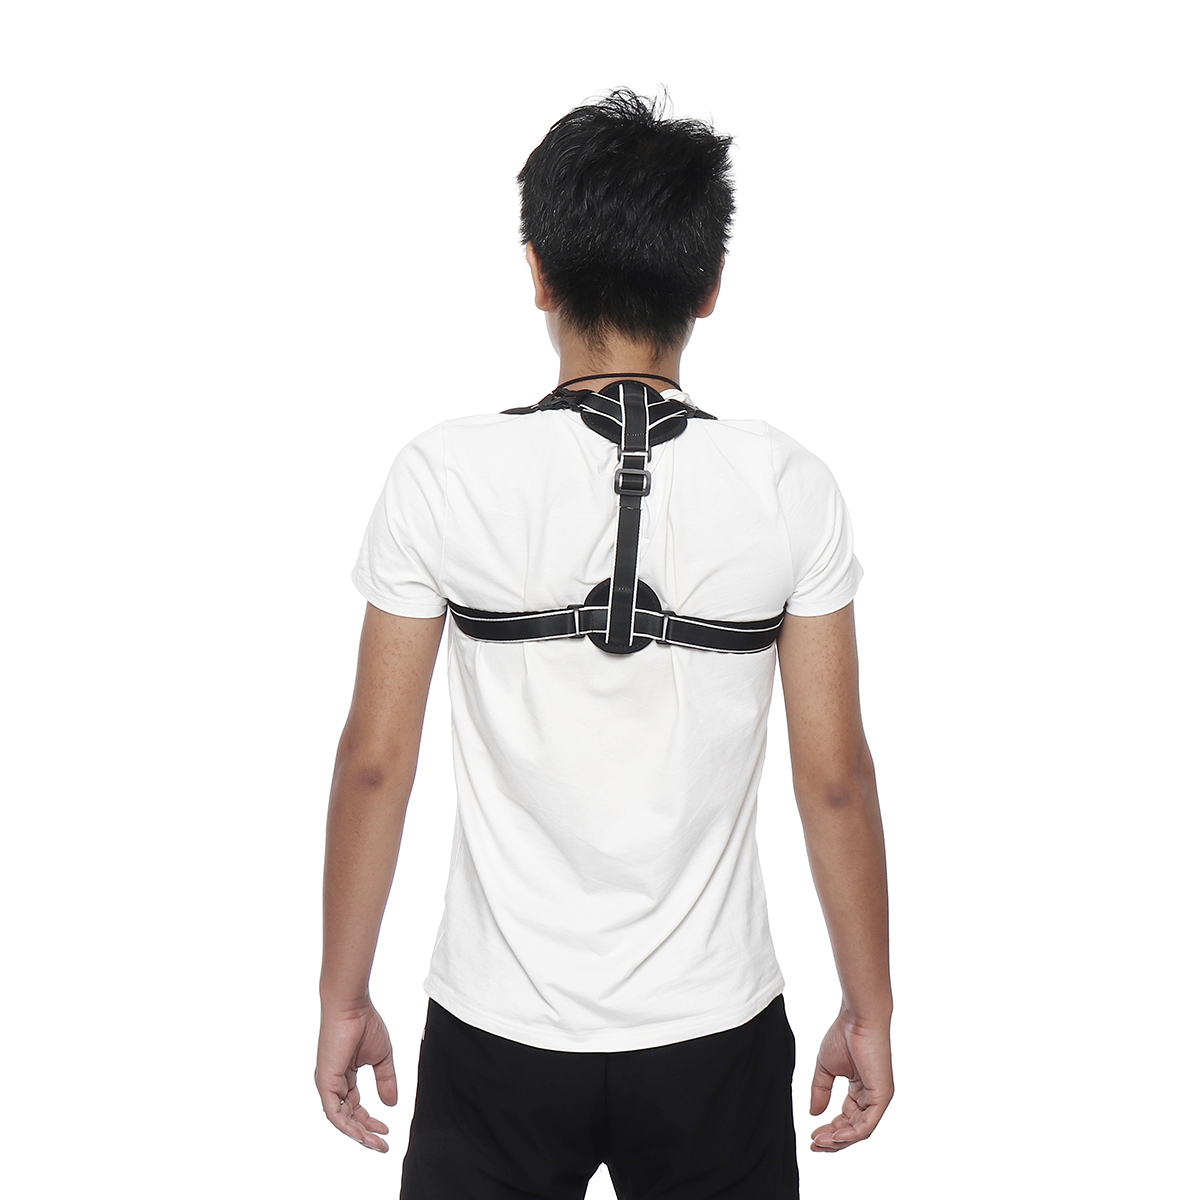 Shoulder-Support-Magnetic-Posture-Corrector-Back-Straight-Shoulders-Brace-Sports-Protective-Gear-1548621-8